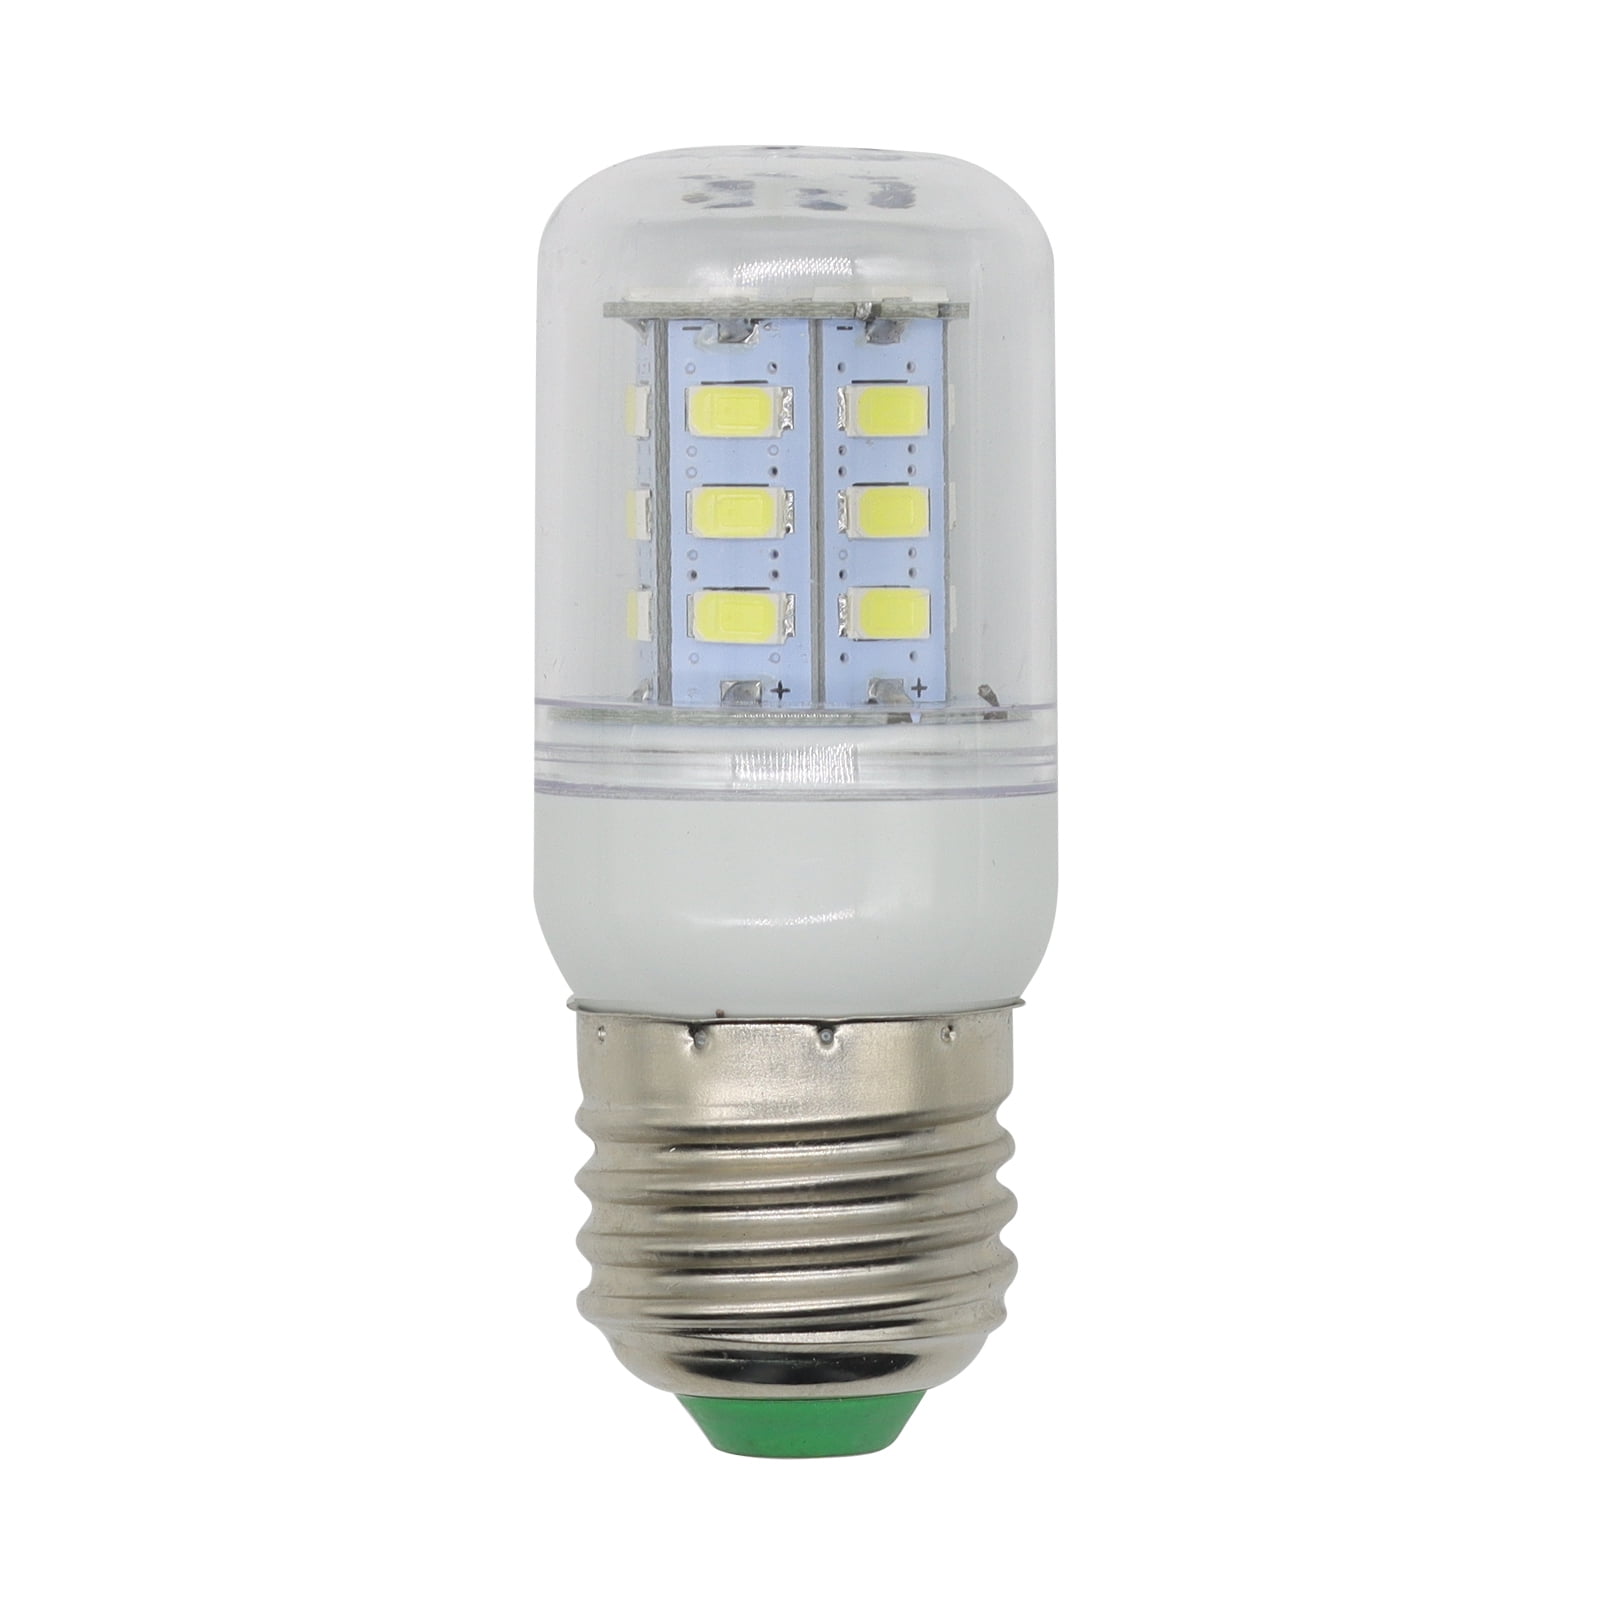 Frigidaire® Replacement Light Bulb For Refrigerator, Part# 5304511738